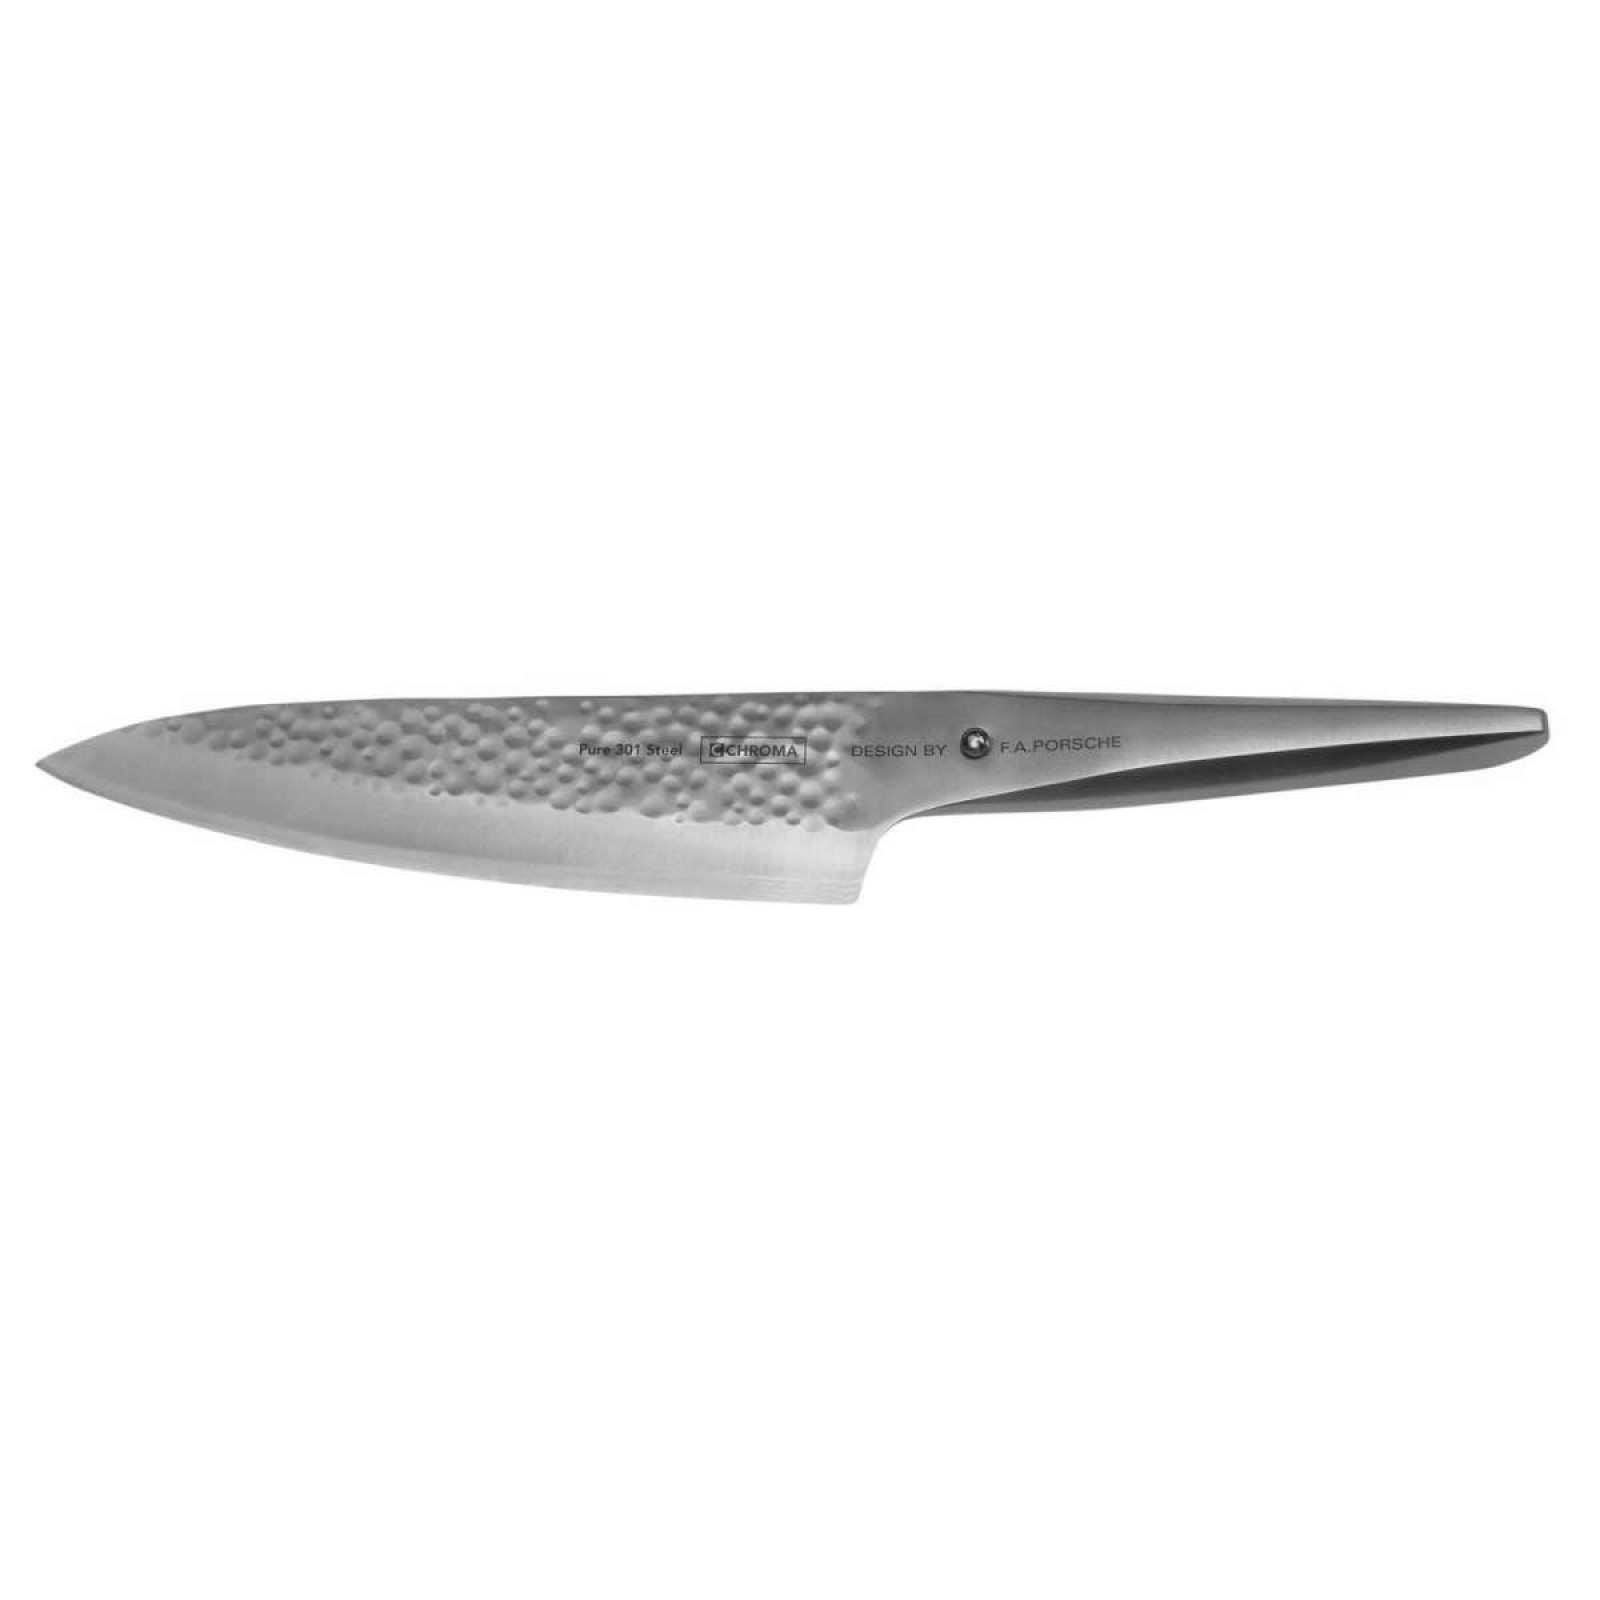 F.A. Porsche Chroma Type 301 5.75-Inch Small Chef Knife